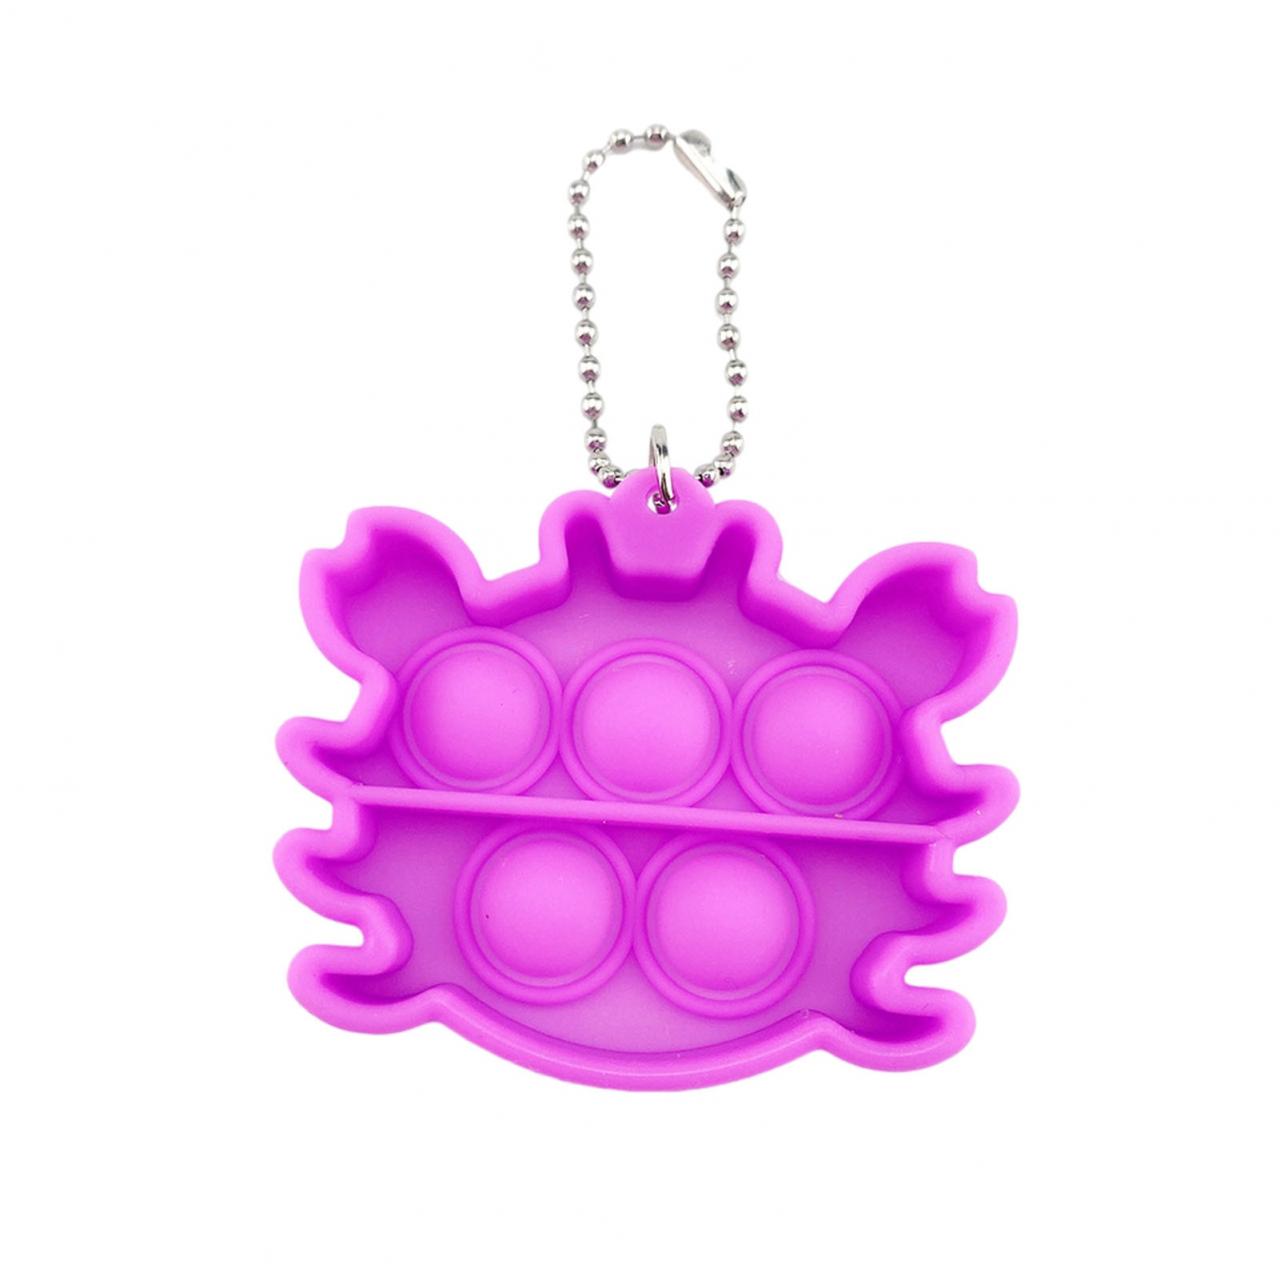 crab keychain pop it fidget anti stress toys - Simple Dimple Fidget